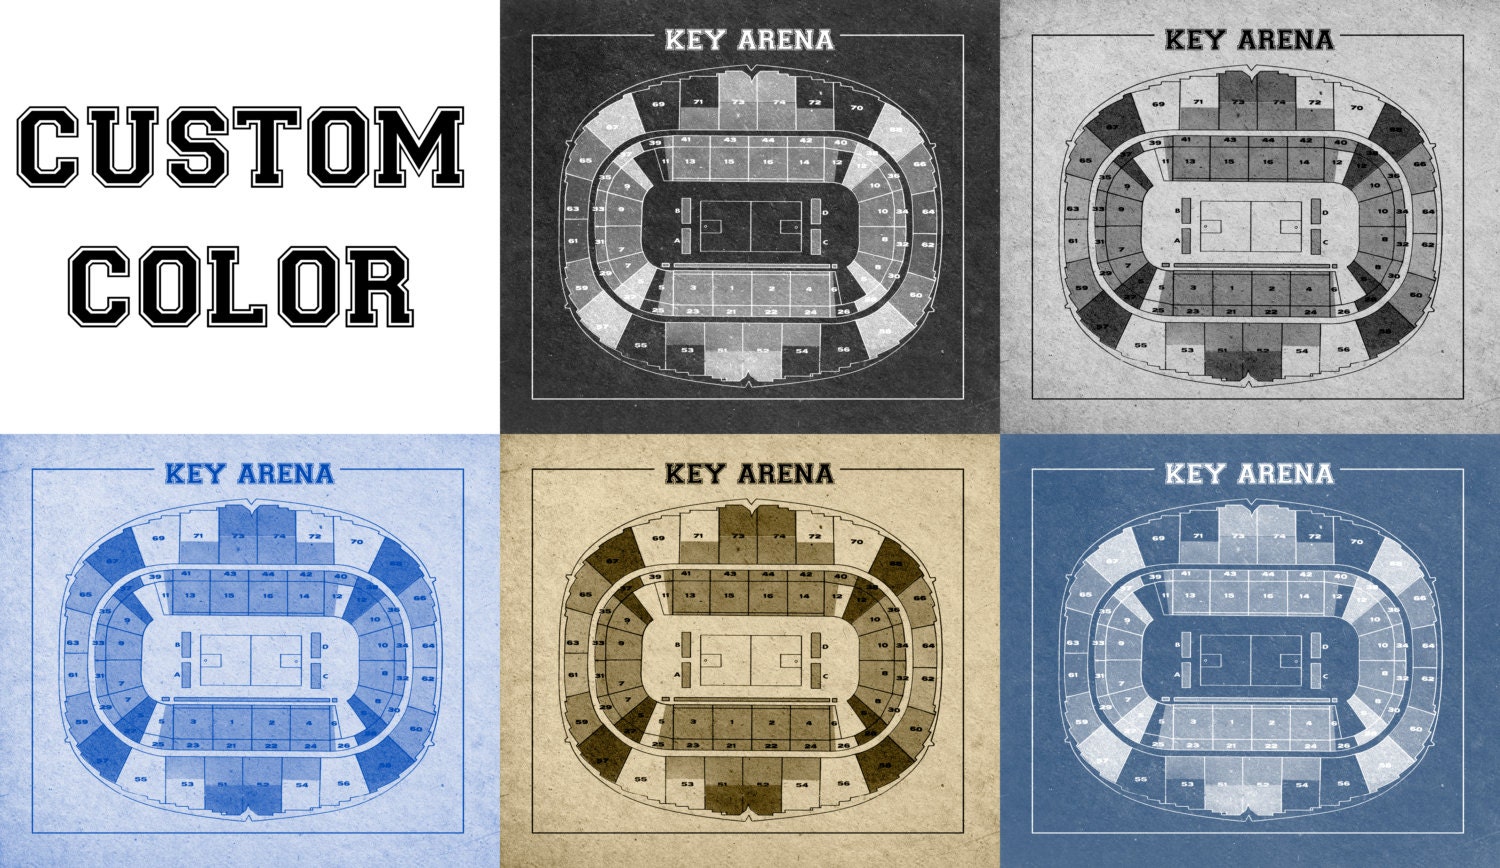 Key Arena Seating Chart